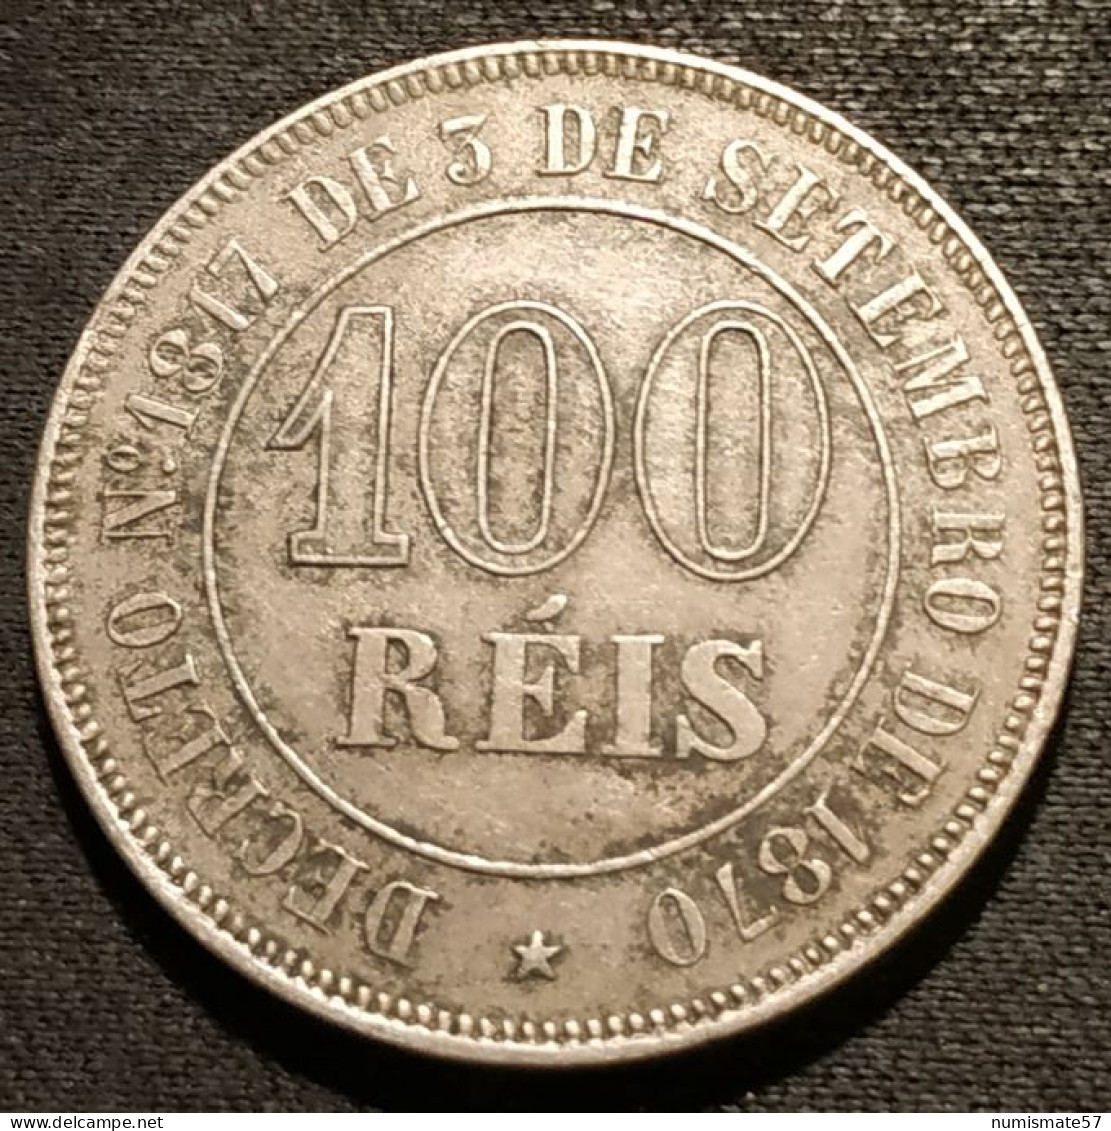 BRESIL - 100 REIS 1871 - Pedro II - KM 477 - Brasil - Brazil - Brésil